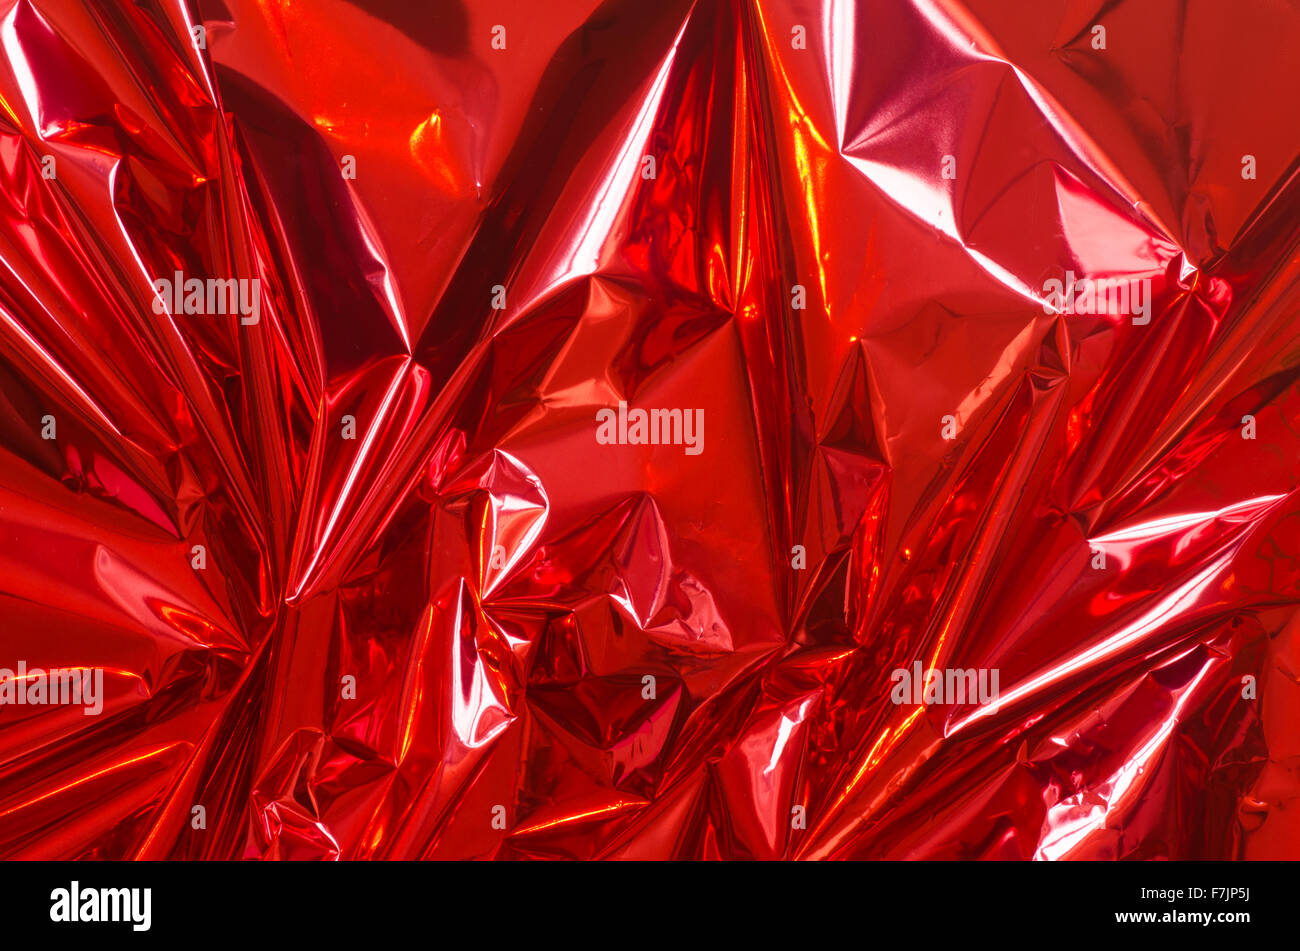 red shiny metallic foil background Stock Photo